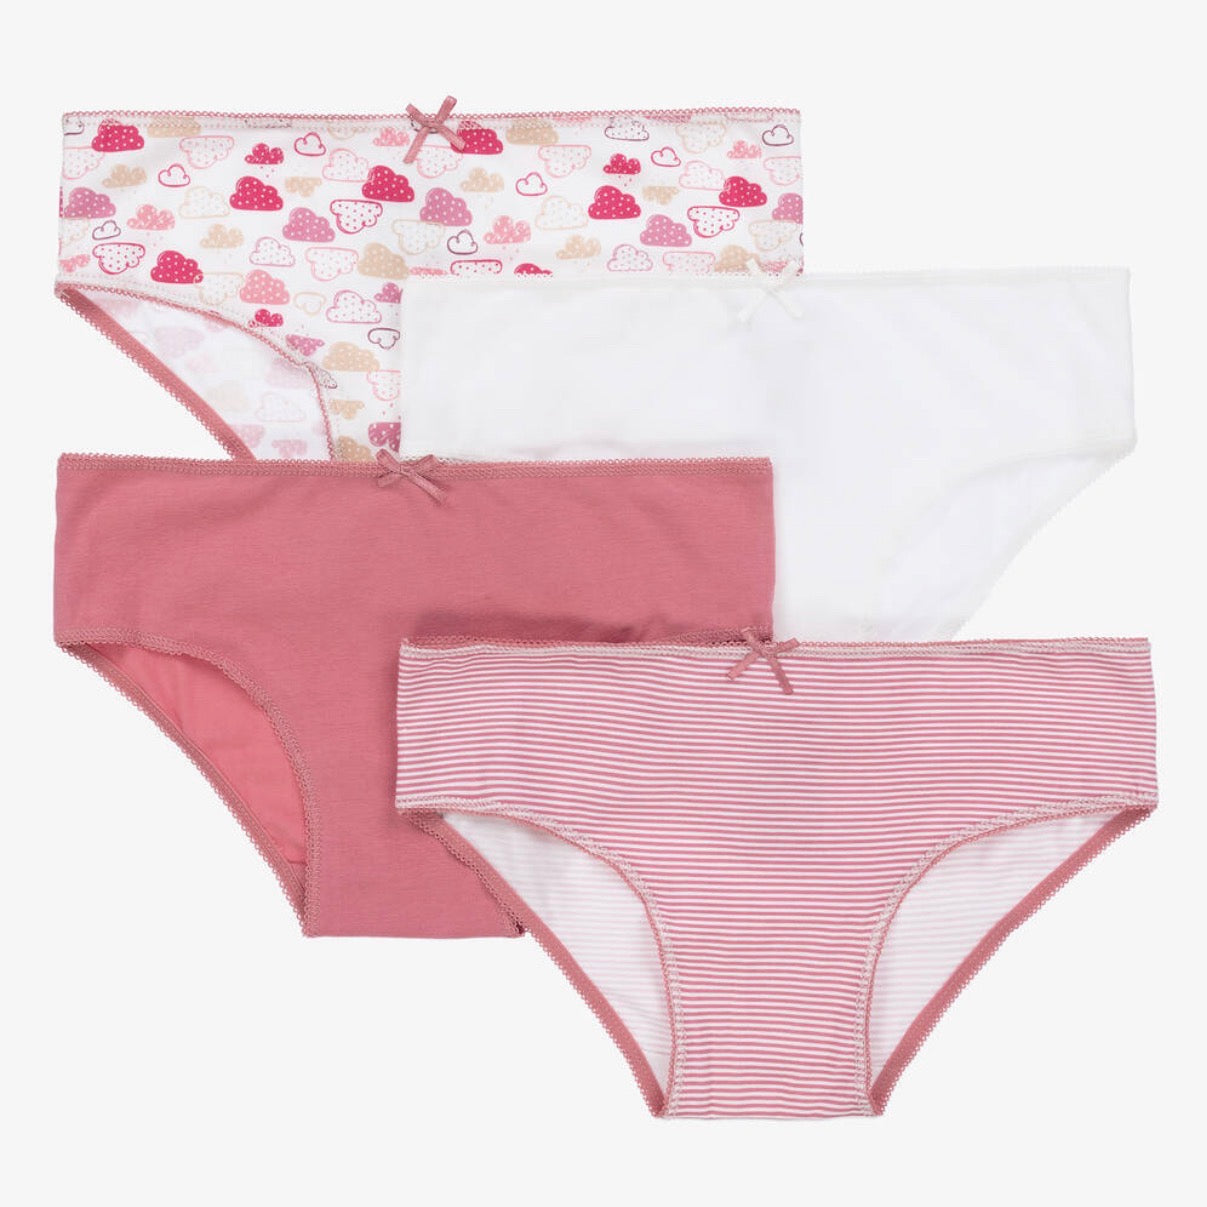 Mayoral Girls 4 Pack Underwear Set 10560 Pink Clothing 4YRS / Pink,6YRS / Pink,8YRS / Pink,10YRS / Pink